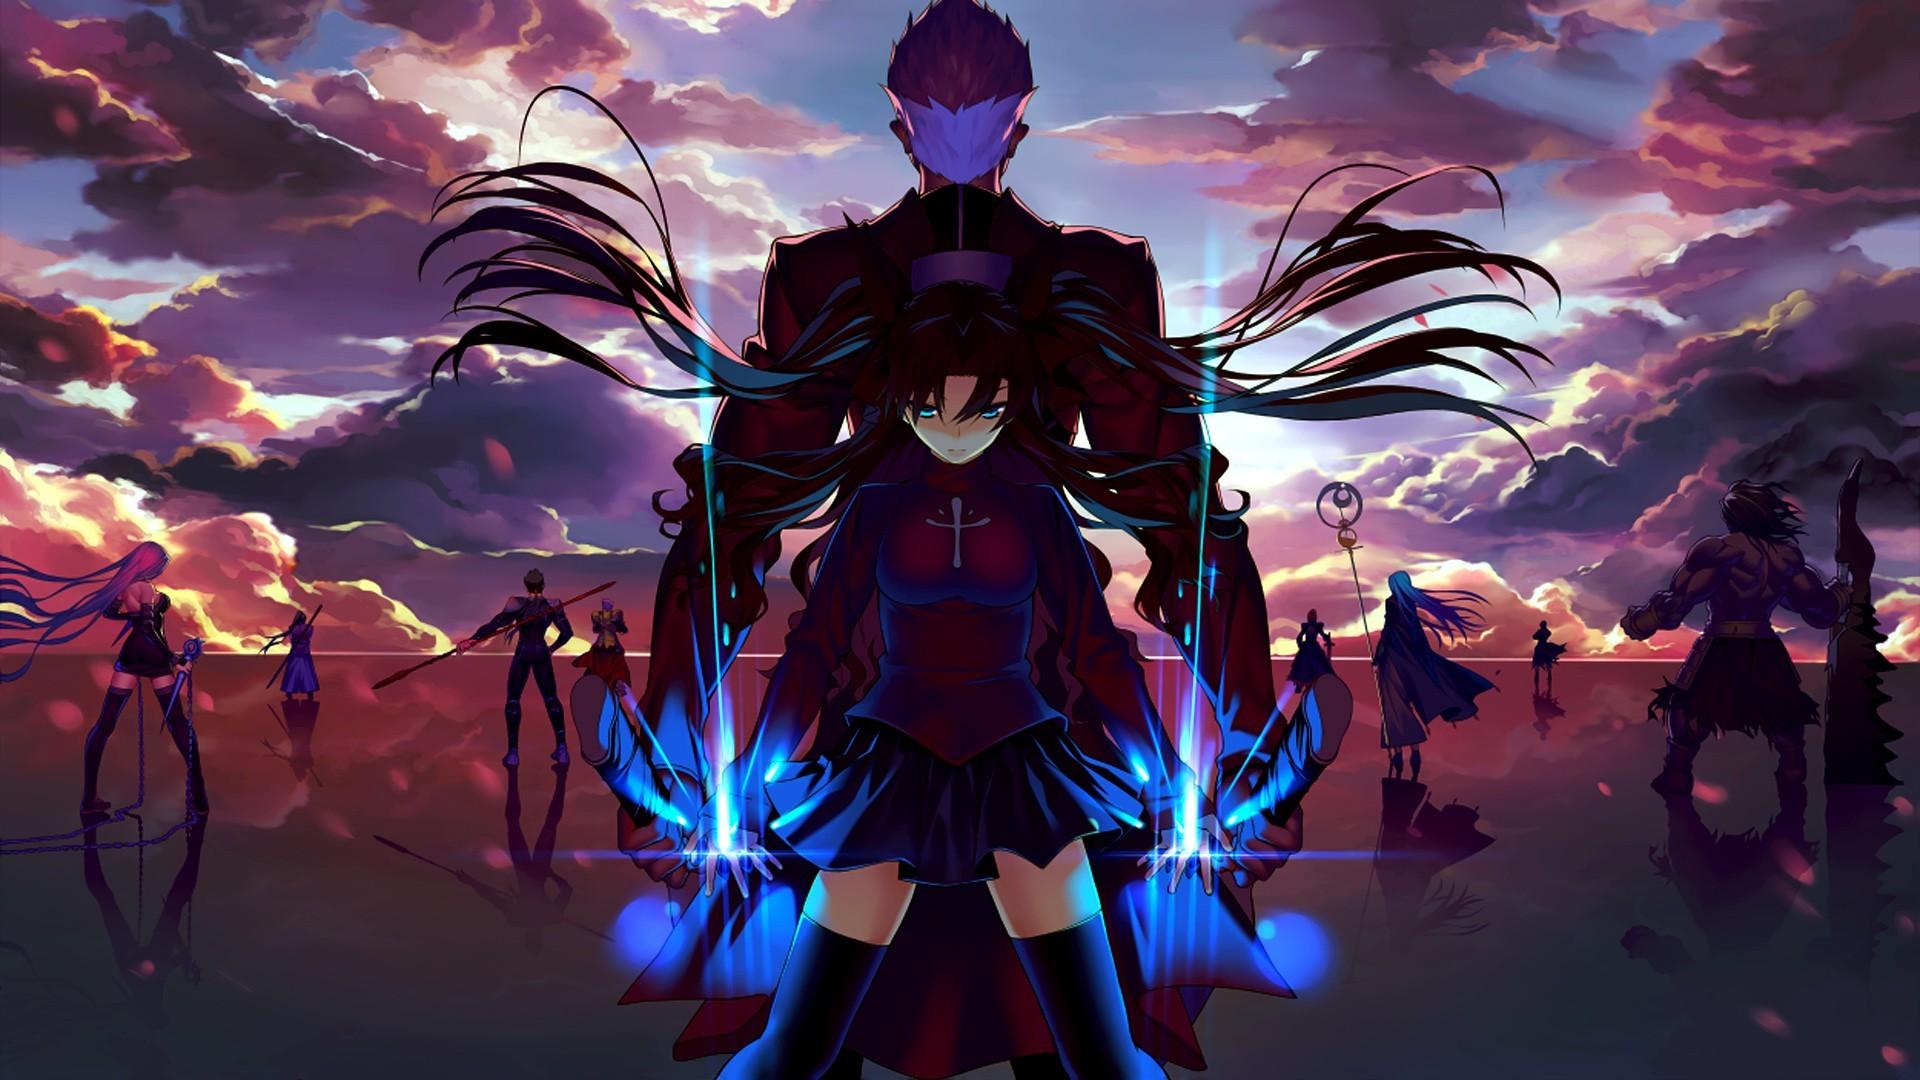 Download 8k Anime Modern Fantasy Wallpaper